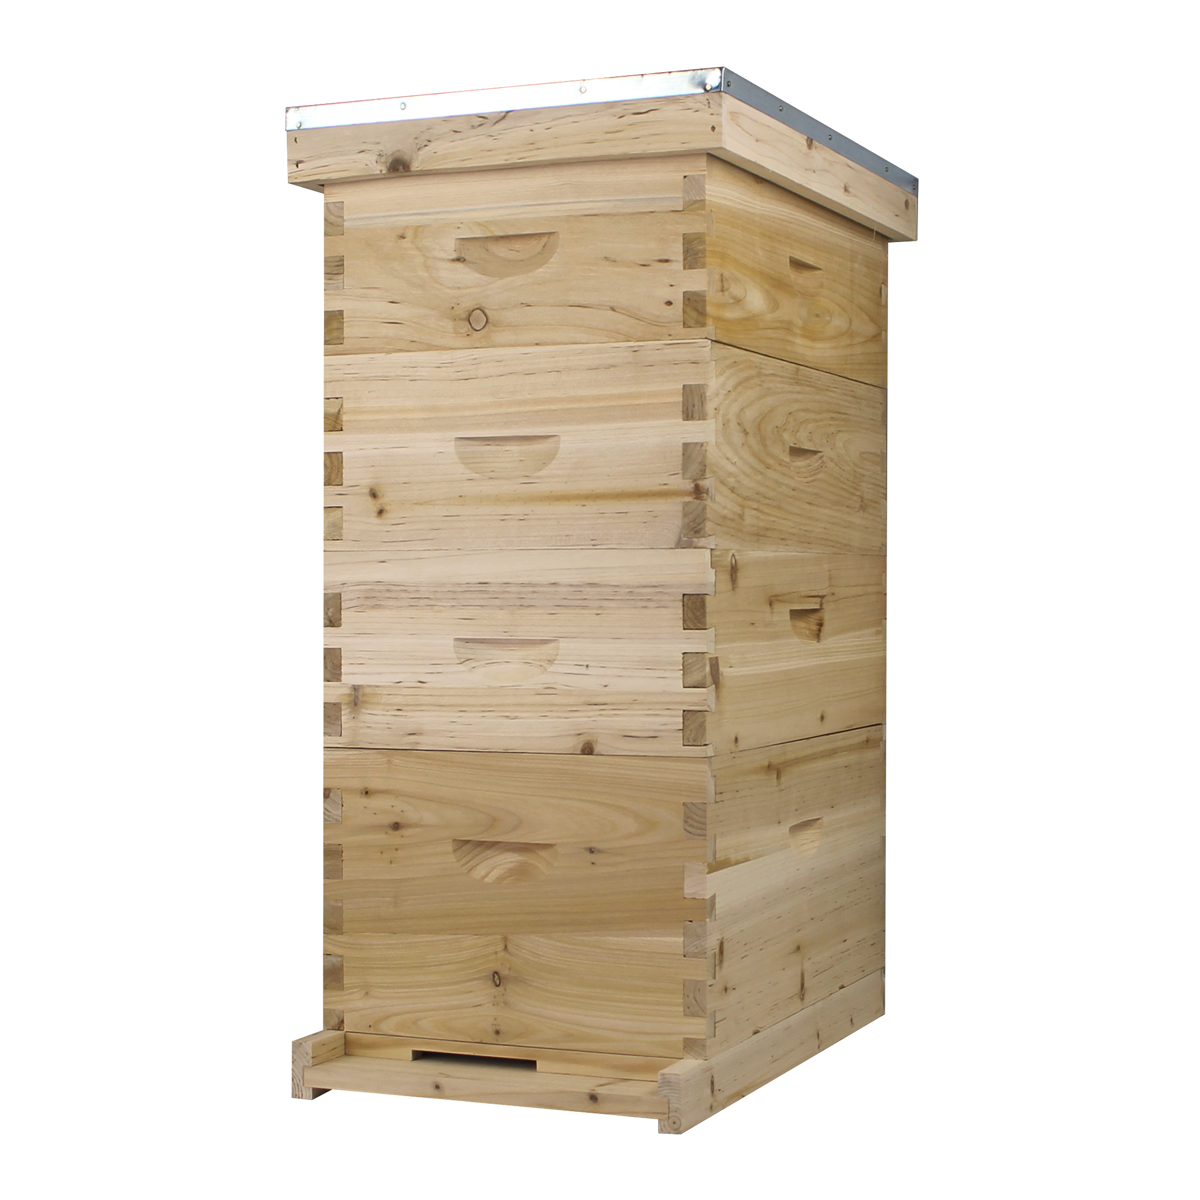 NuBee 8 Frame Beehive With 1 Deep Bee Box & 3 Medium Bee Boxes